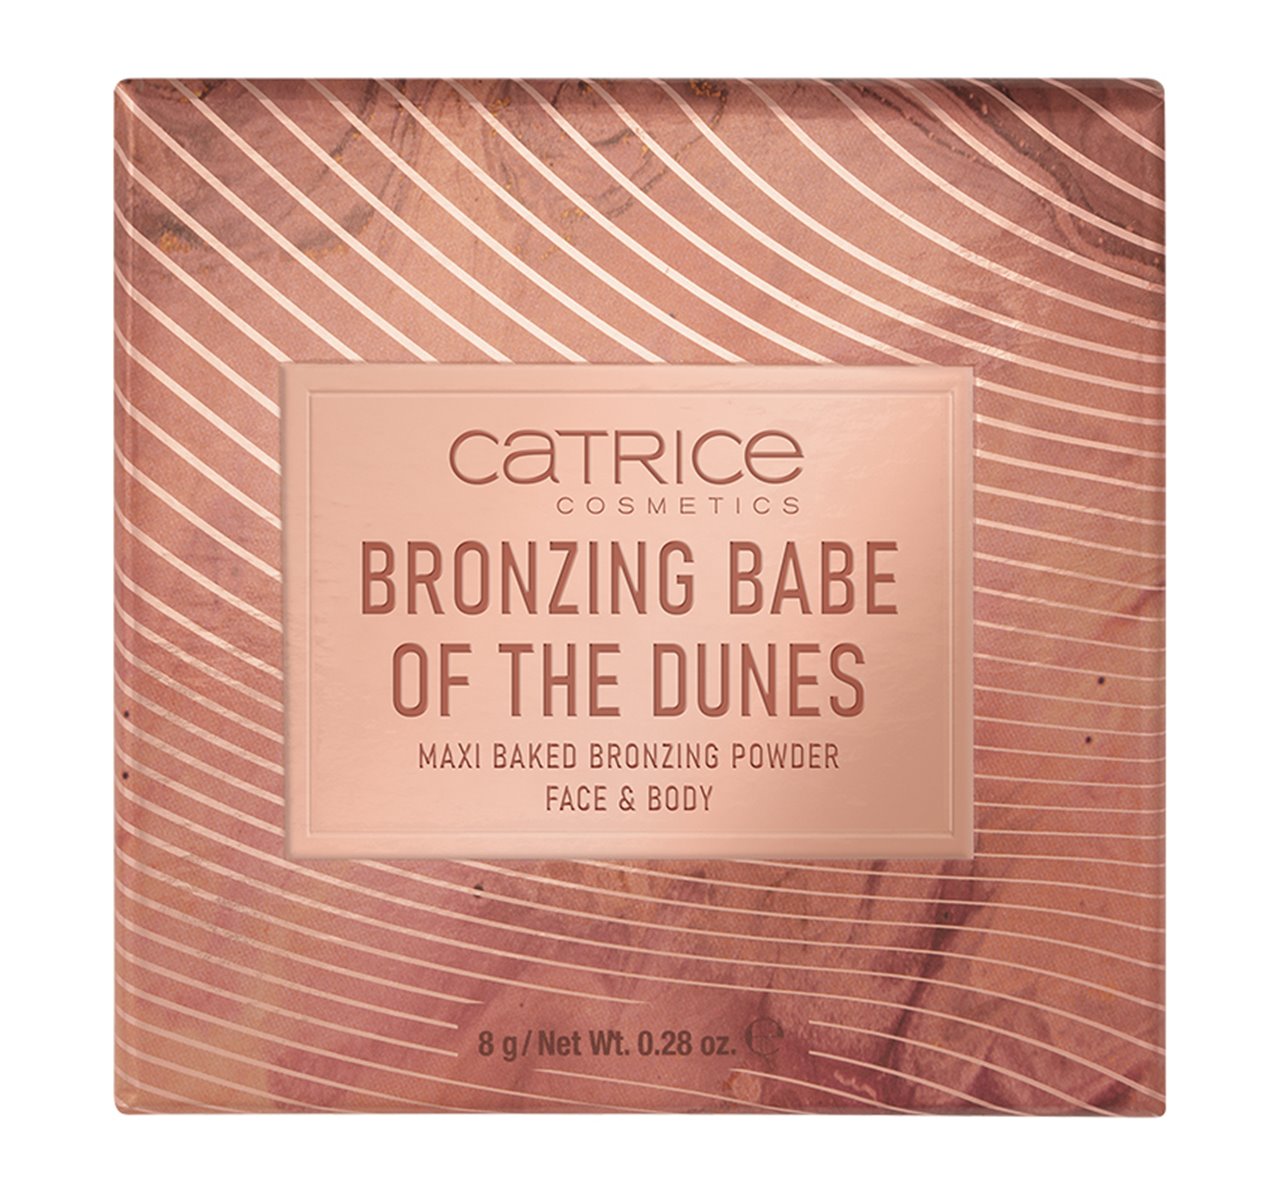 Catrice Bronzing Babe Of Bronzing Baked The Maxi Powder-Face Dunes